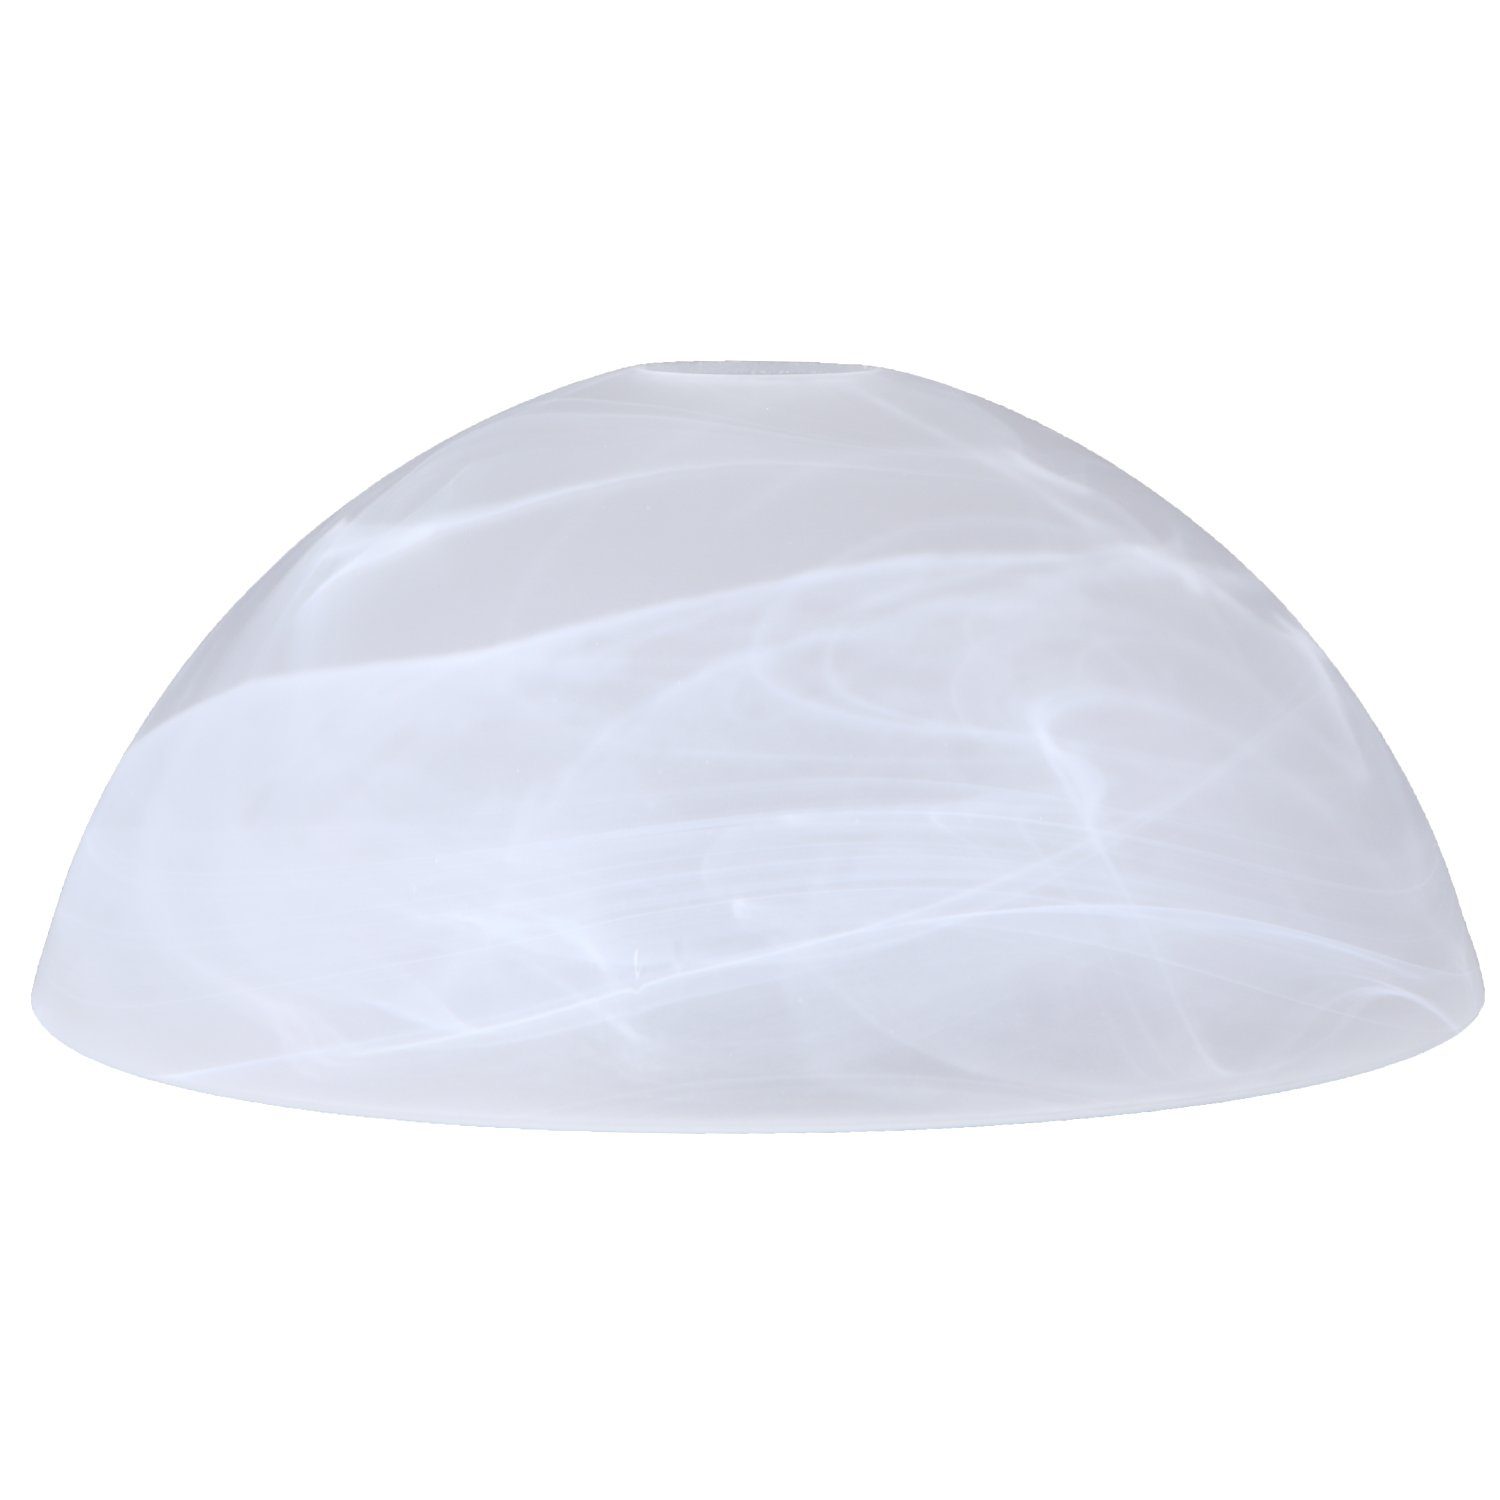 Home4Living Lampenschirm Lampenglas weiß Ø 250mm Alabaster Glas E27 Ersatzglas, Dekorativ